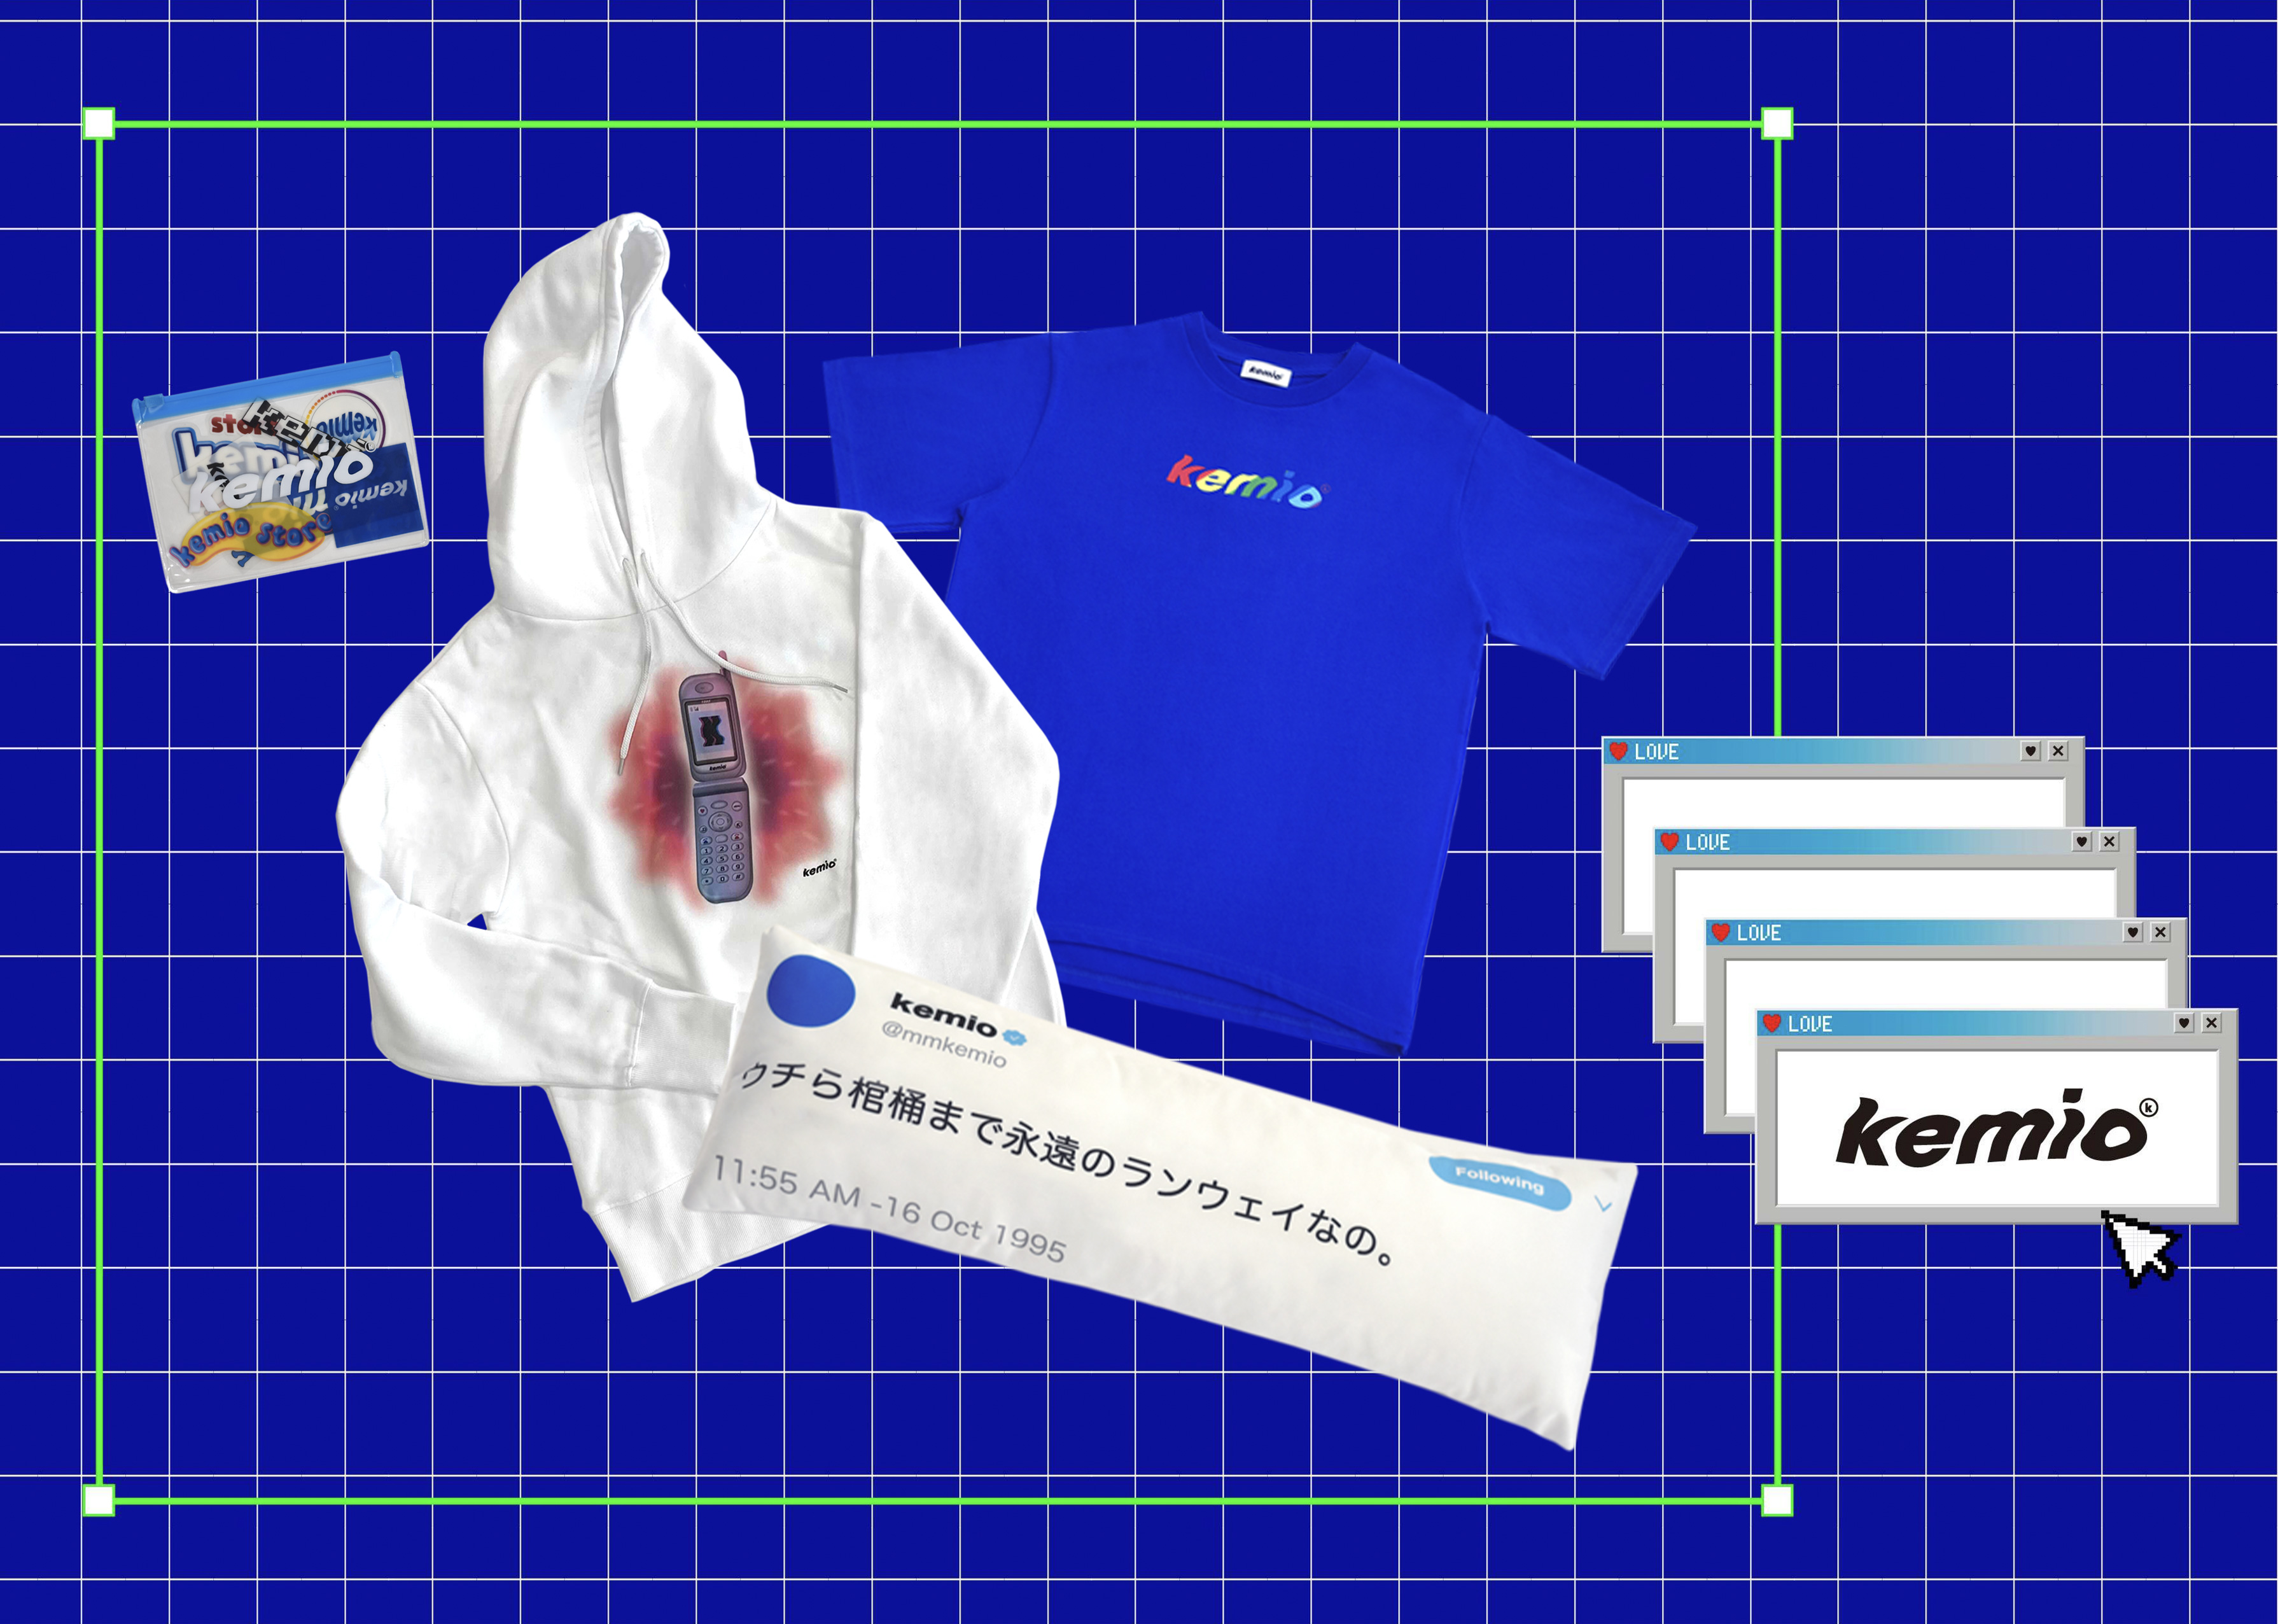 Kemioプロデュースのオフィシャルグッズストア Kemio Store 誕生日の10月16日 金 18 00に予約販売がスタート Konnekt International Inc のプレスリリース